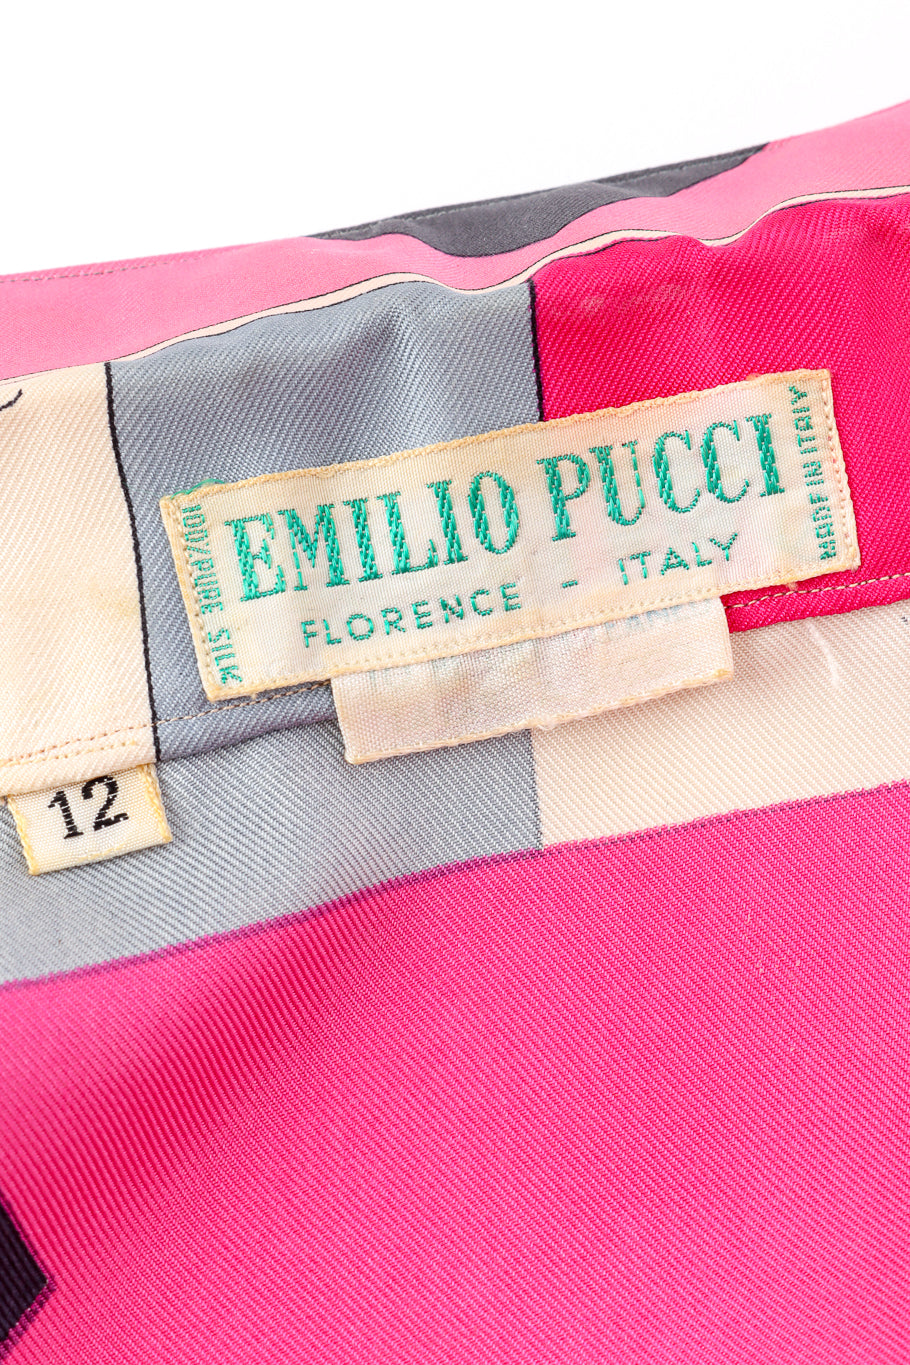 Vintage Emilio Pucci geometric pink patterned blouse close up of inside Pucci label  @Recess LA